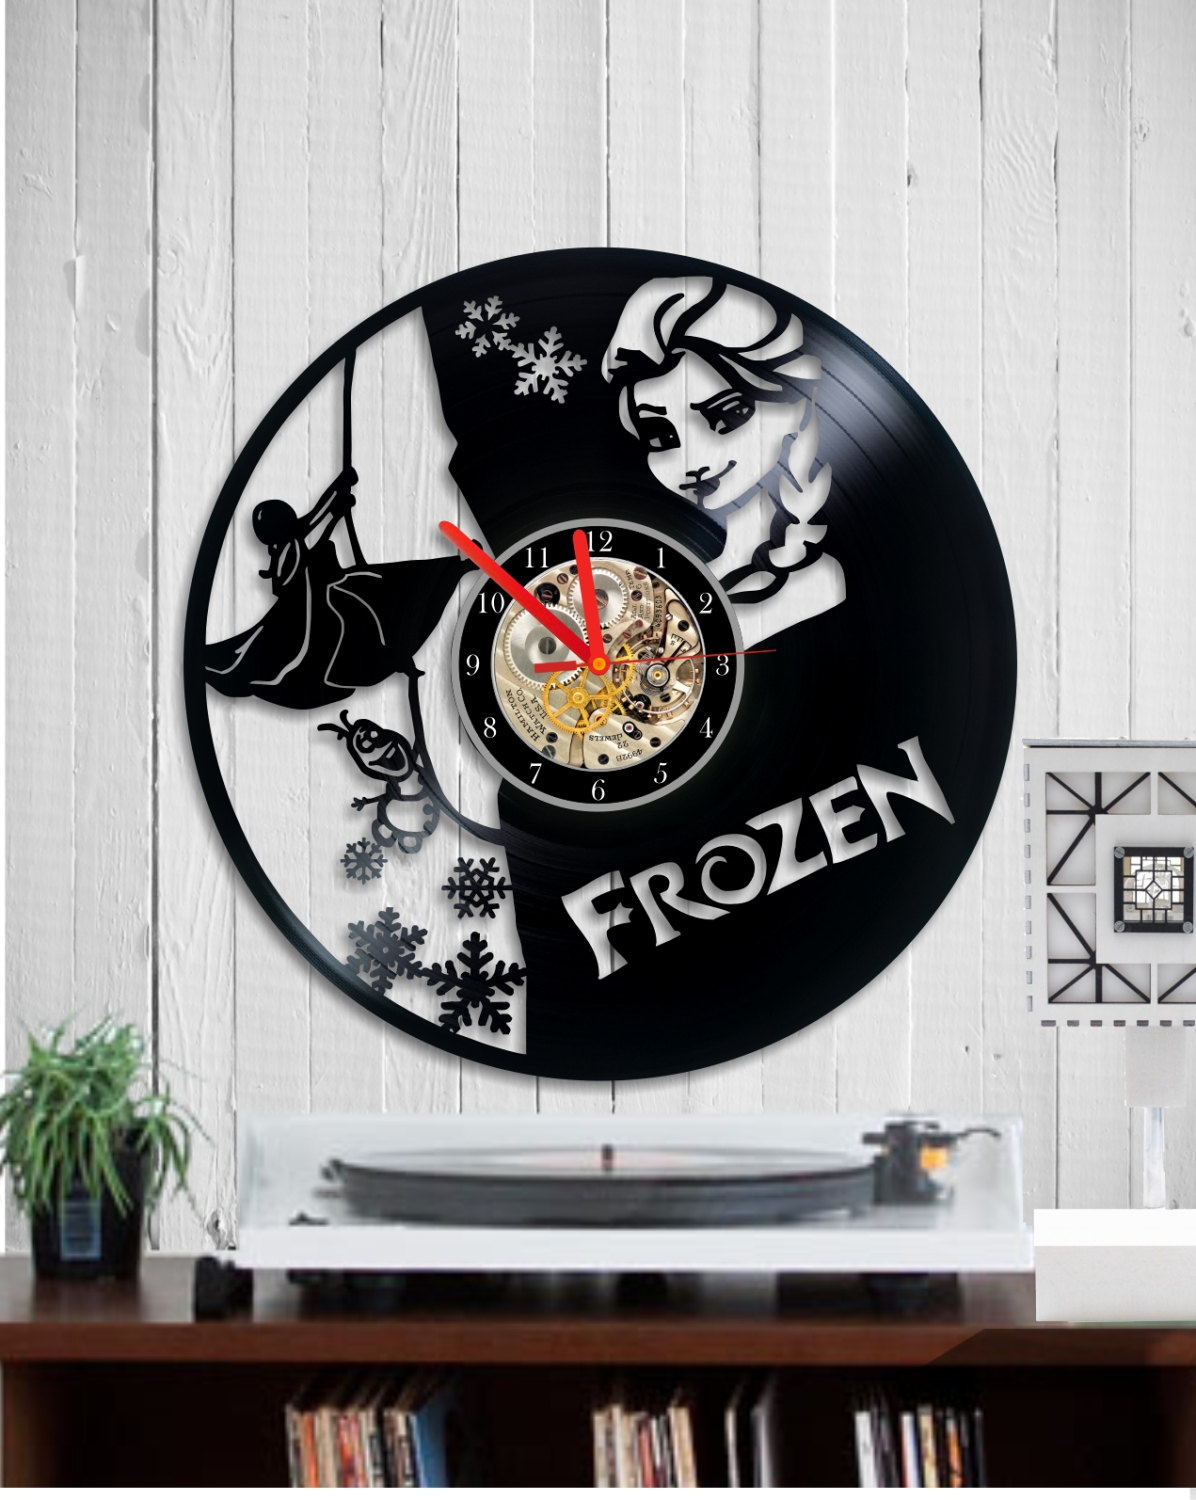 VINYL RECORD CLOCK - FROZEN CLOCK VINYL - Wall Clock Frozen